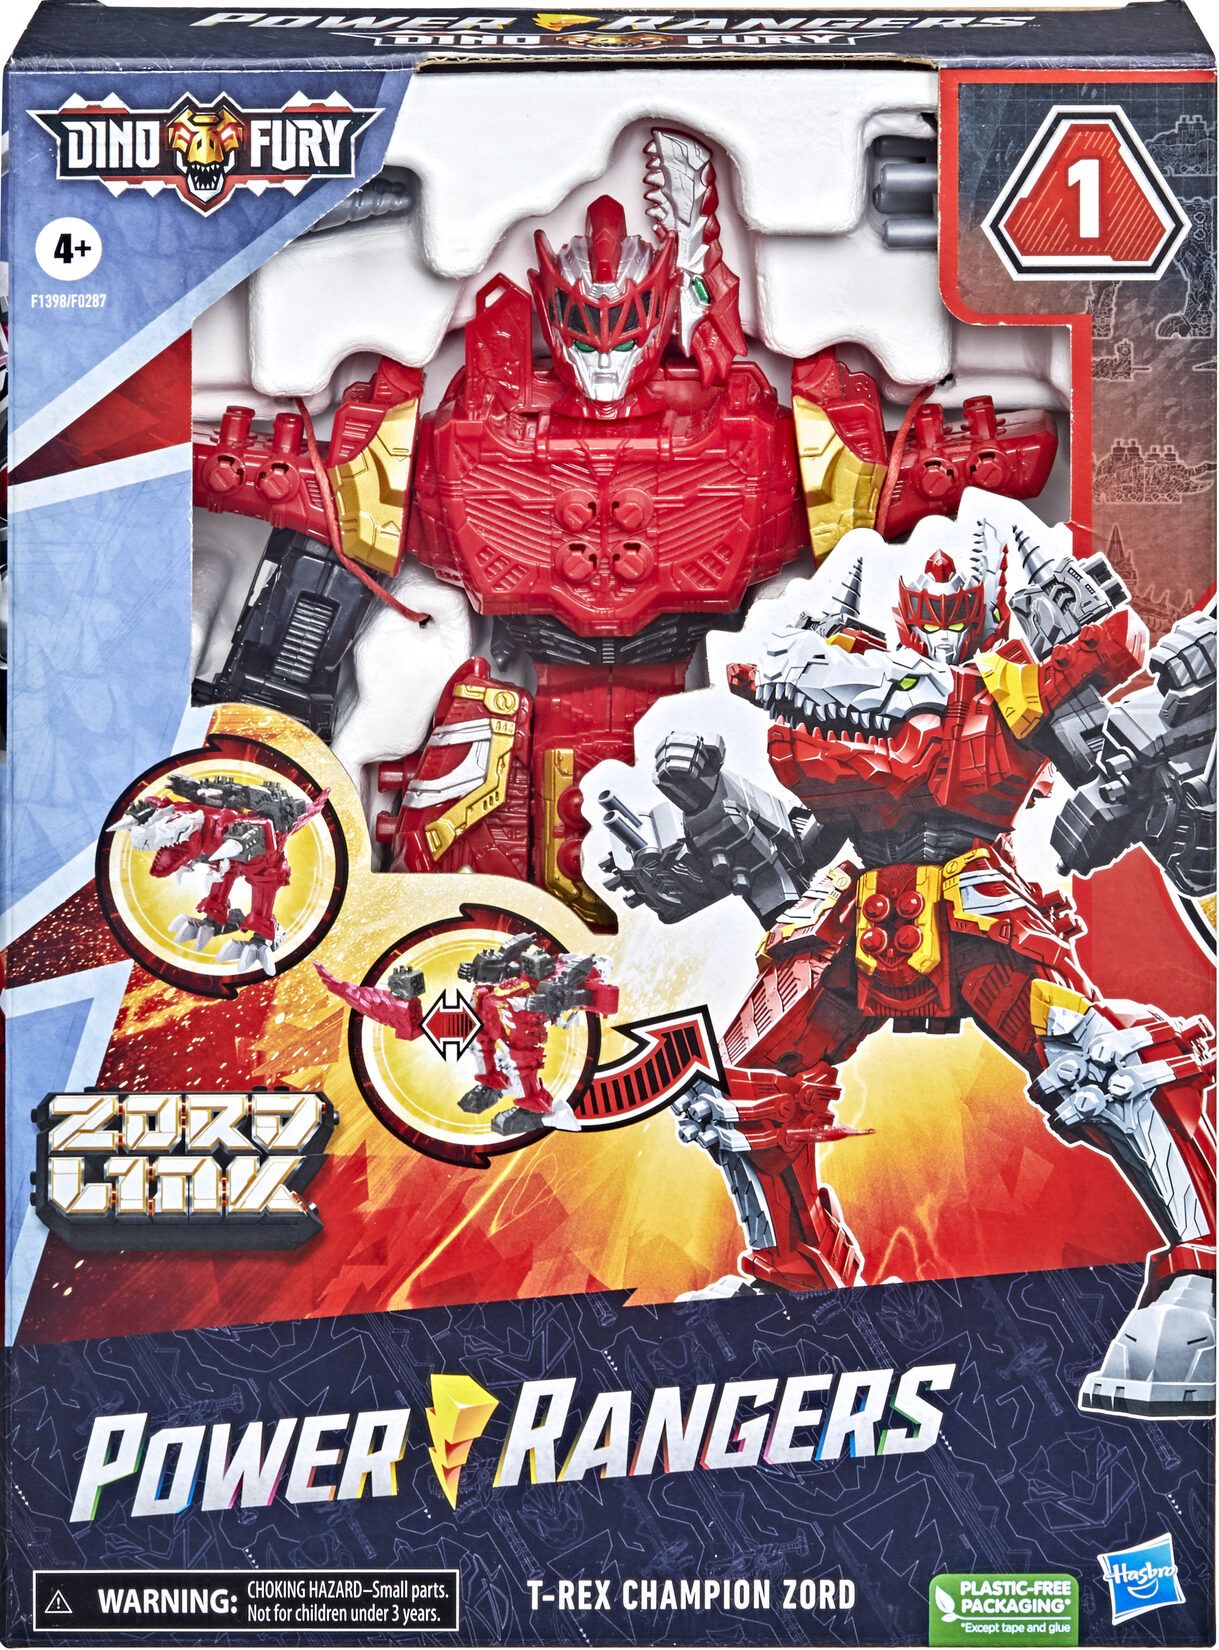 Power-Rangers-Dino-Fury-T-Rex-Champion-Zord-Combining-Zord